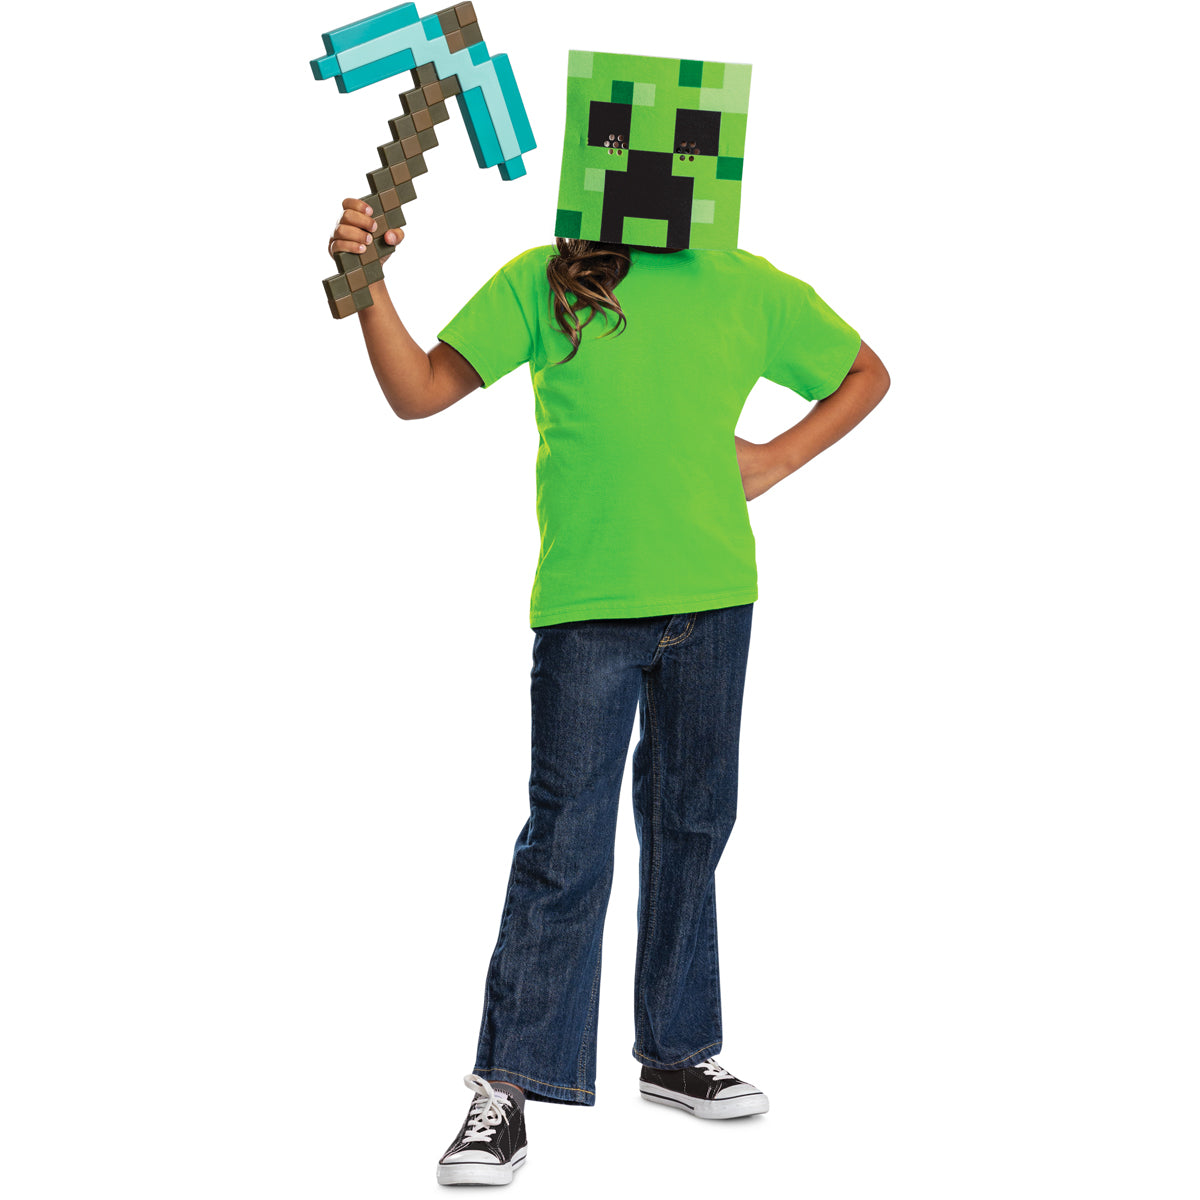 Minecraft Pickaxe & Mask Set Disguise  156269